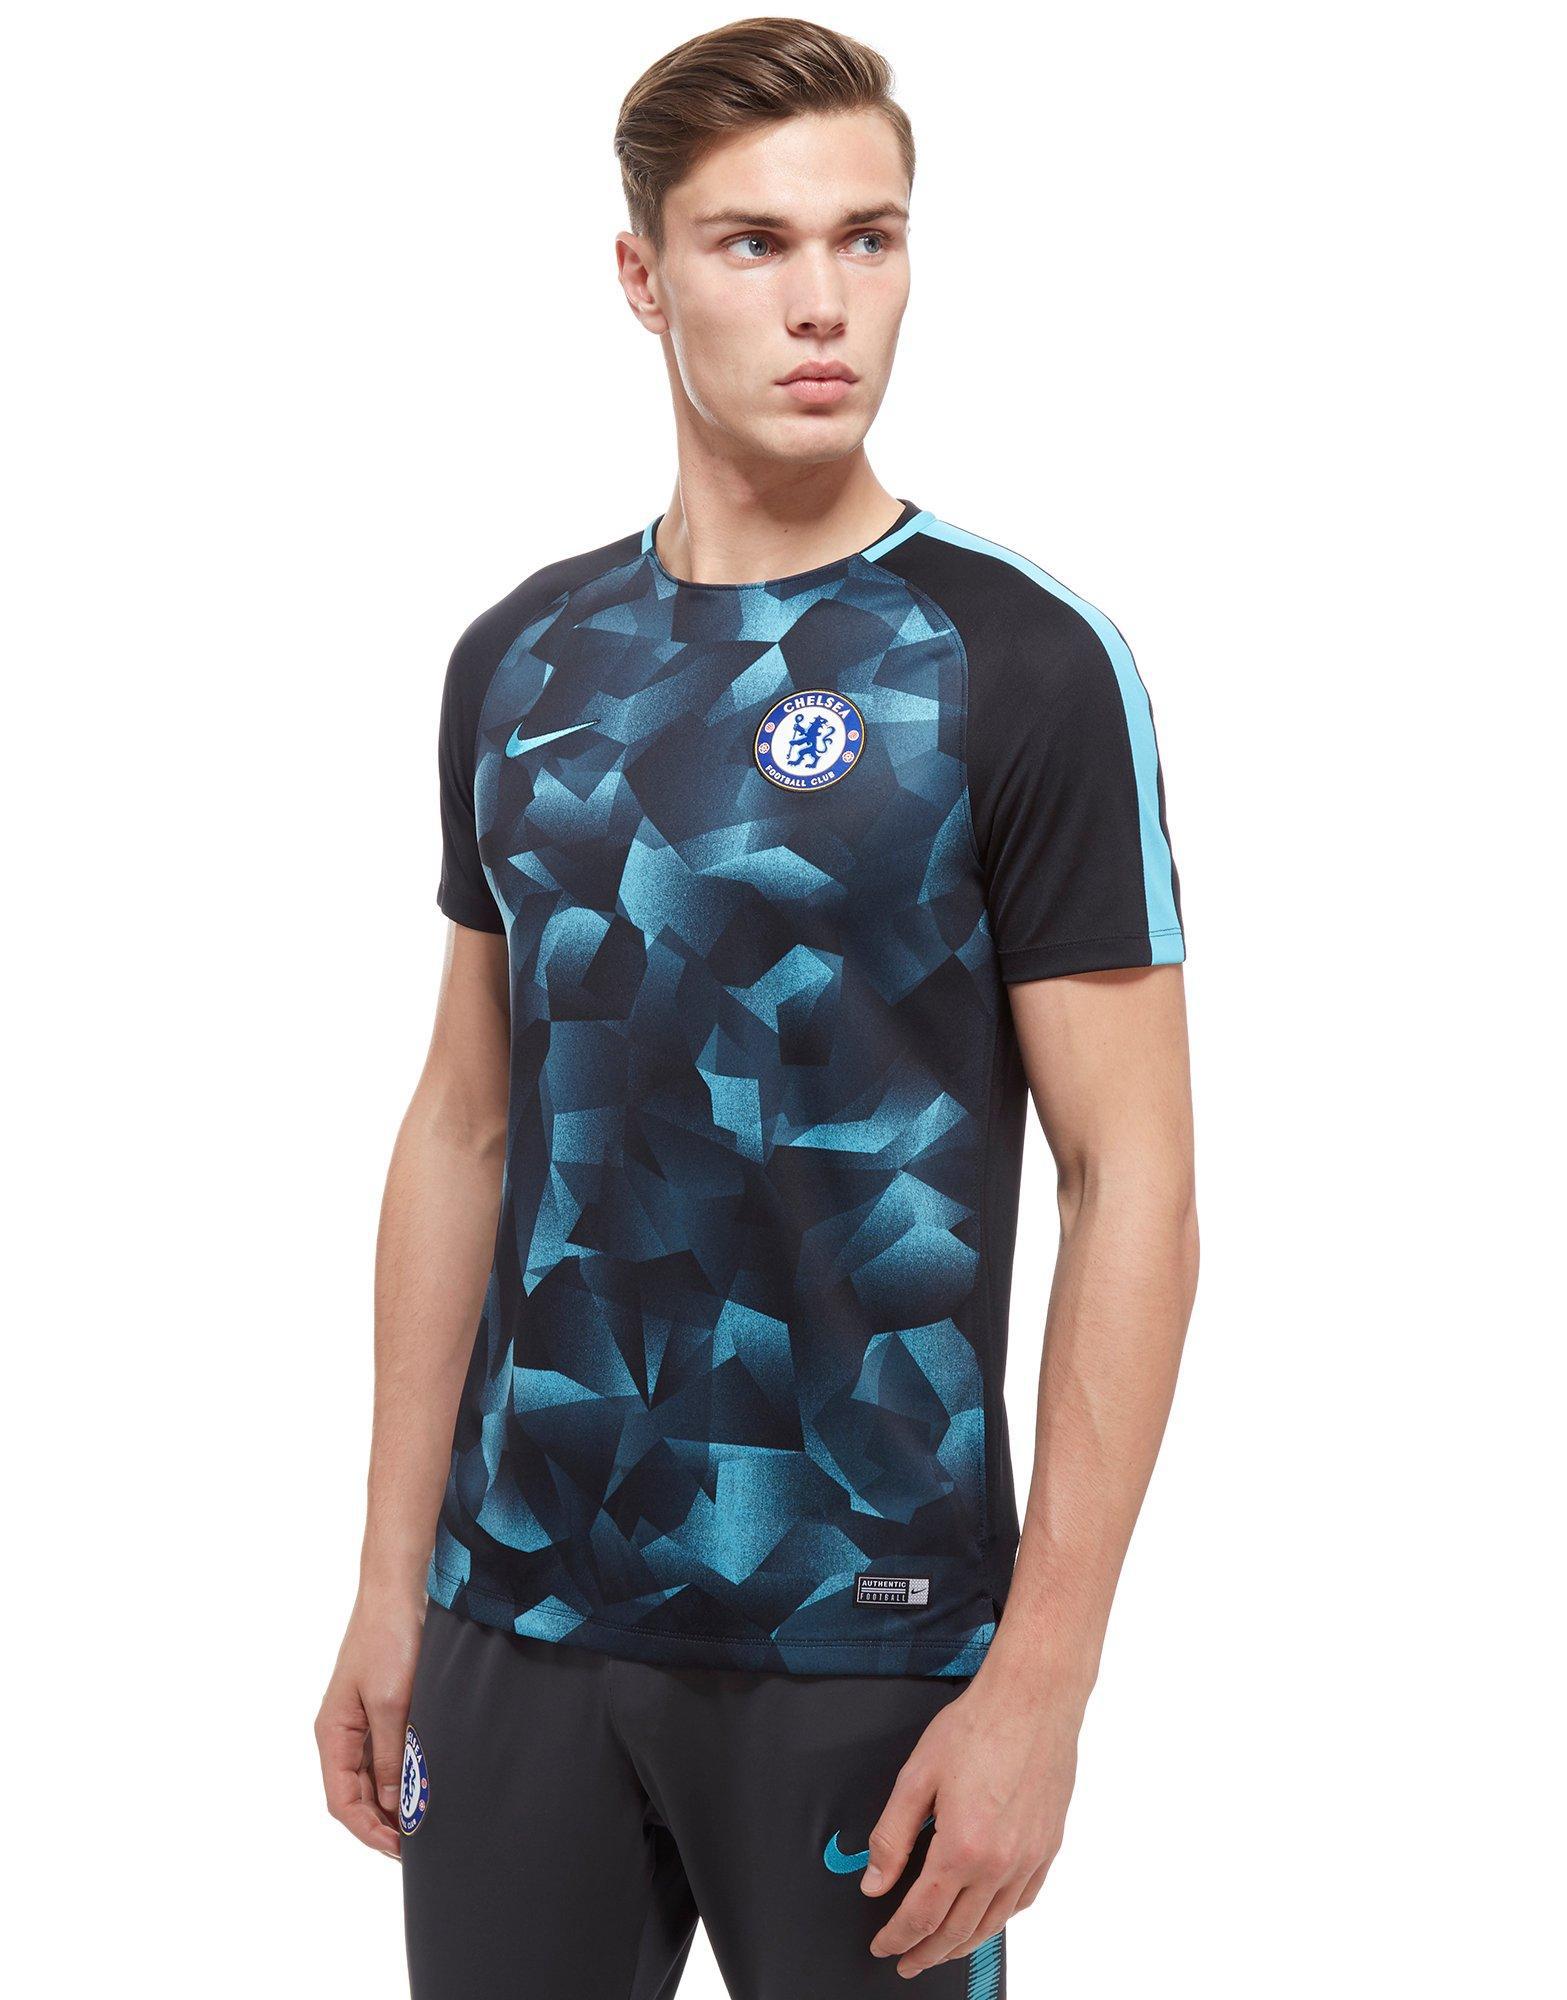 Lyst - Nike Chelsea Fc 2017 Squad Training Shirt in Black for Men